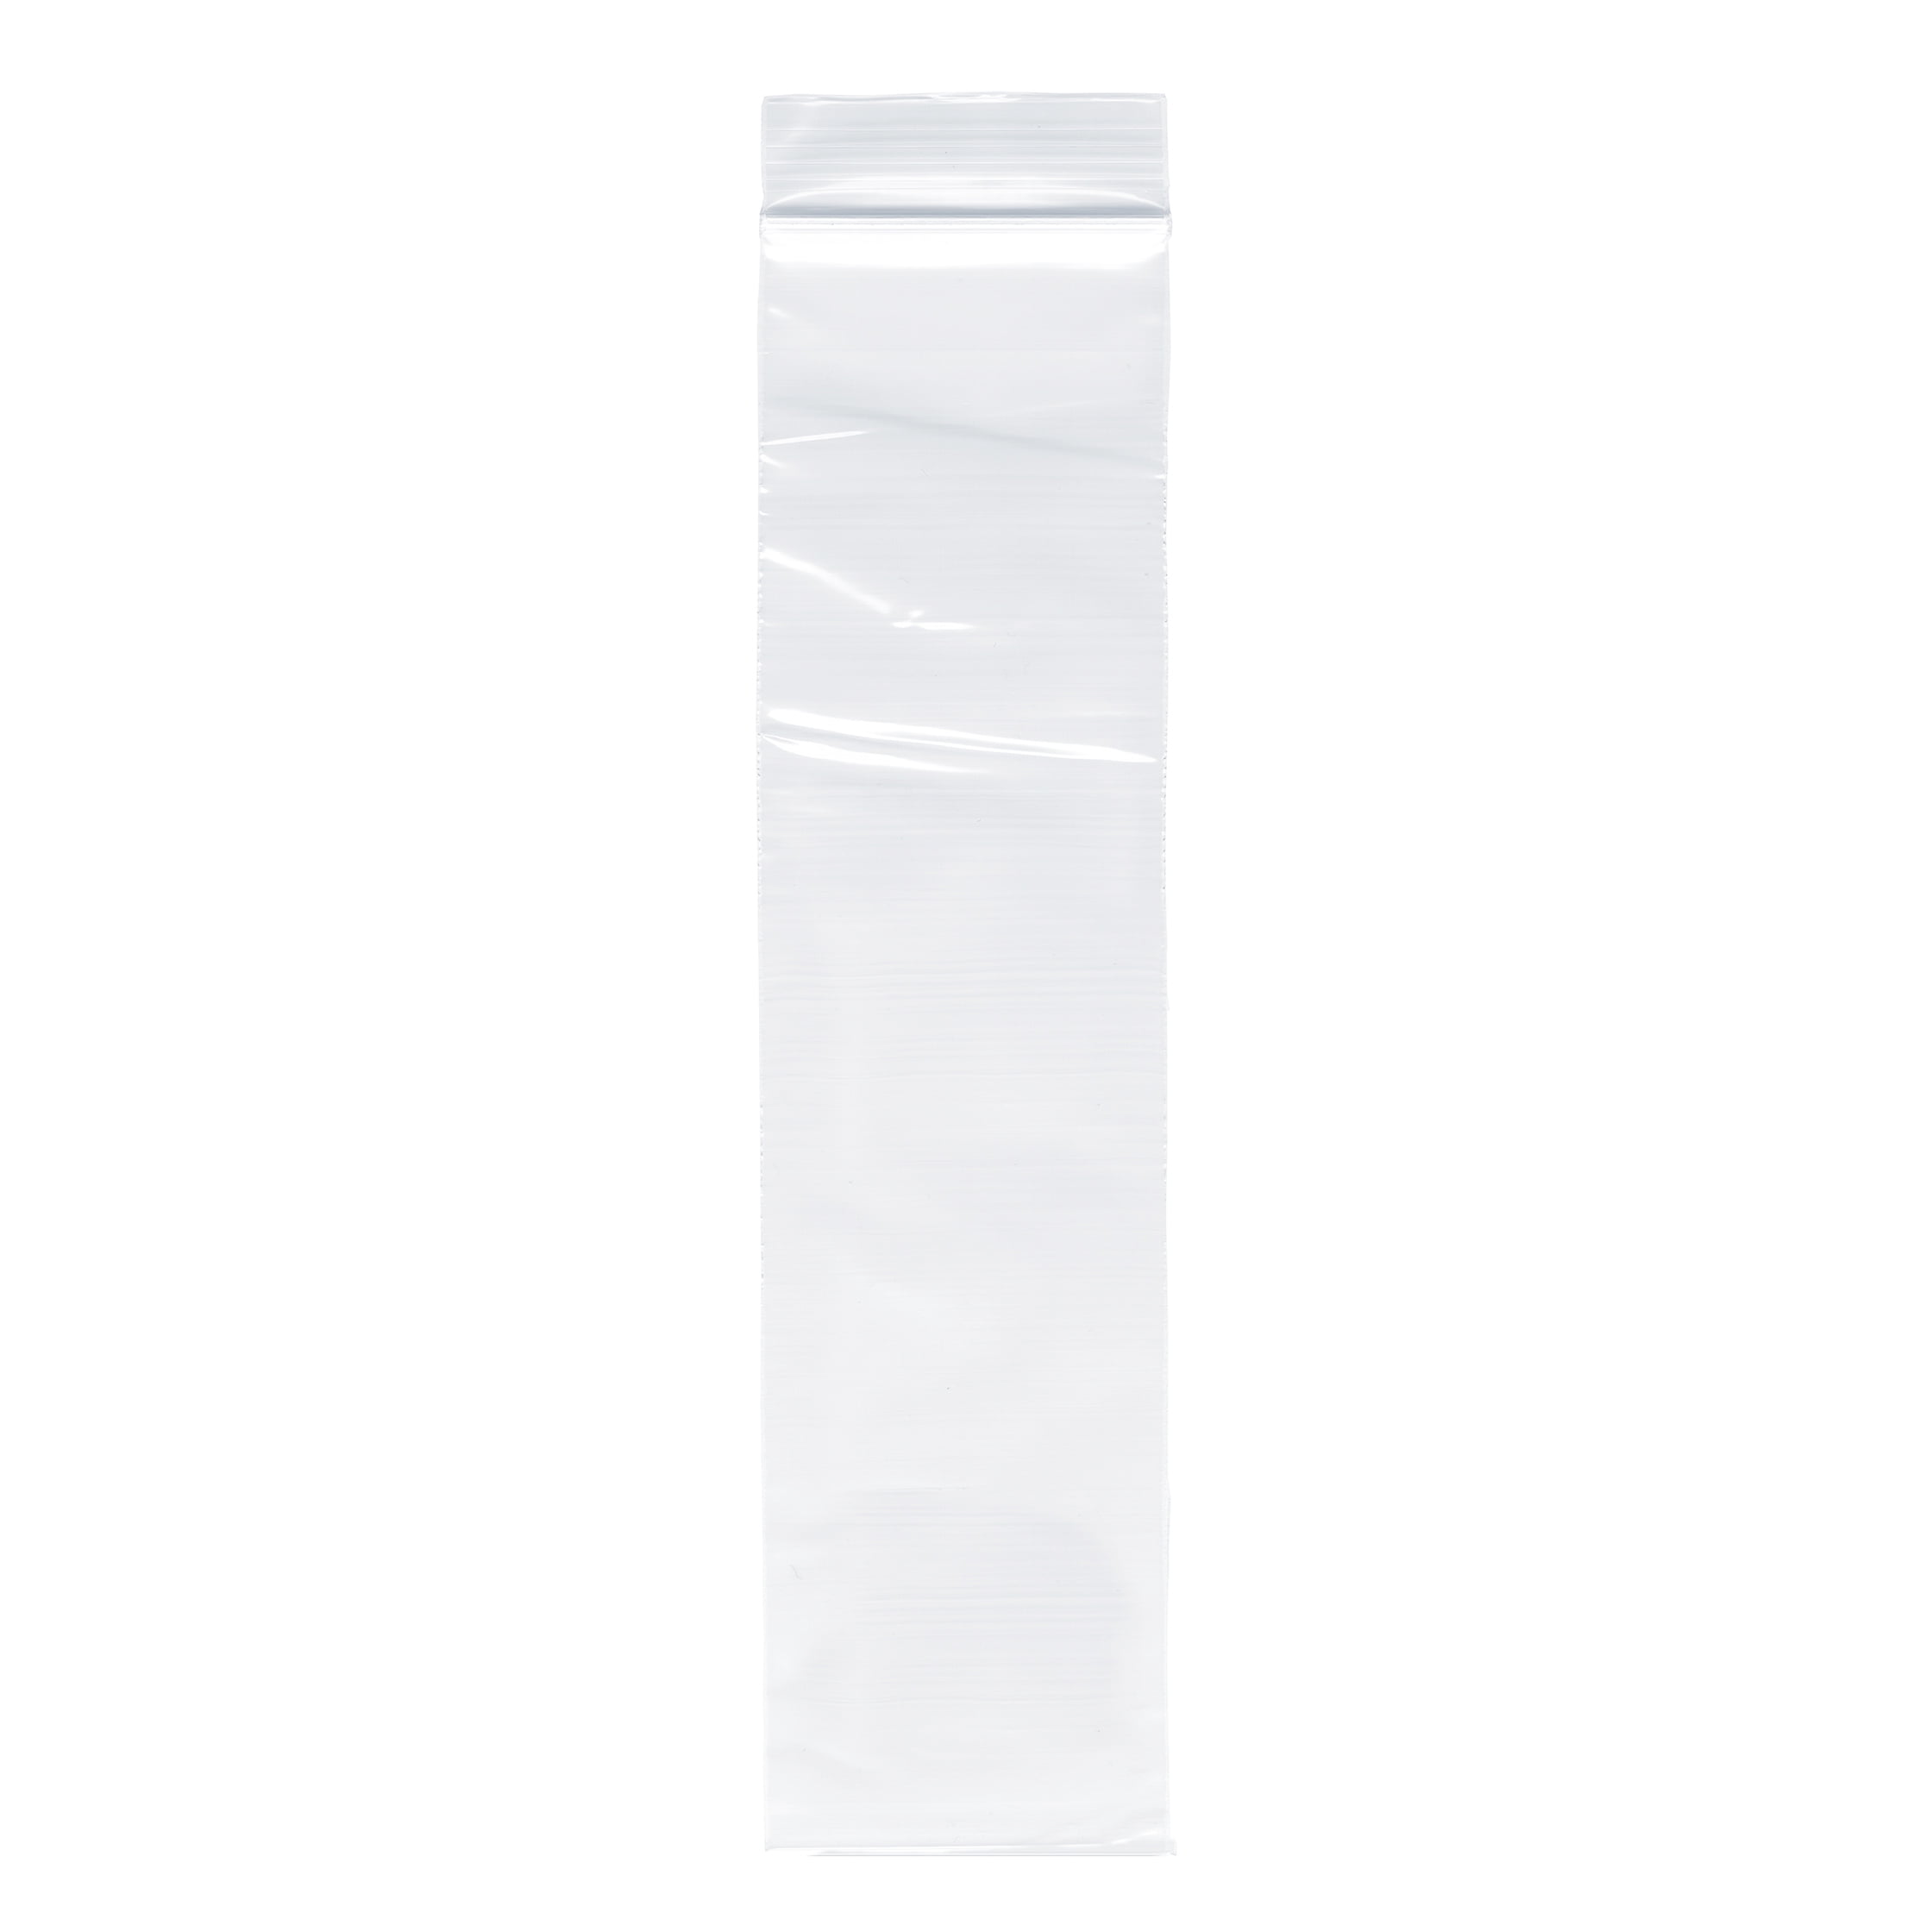 Plymor Zipper Reclosable Plastic Bags, 2 Mil, 1.5 x 2 (Pack of 500)